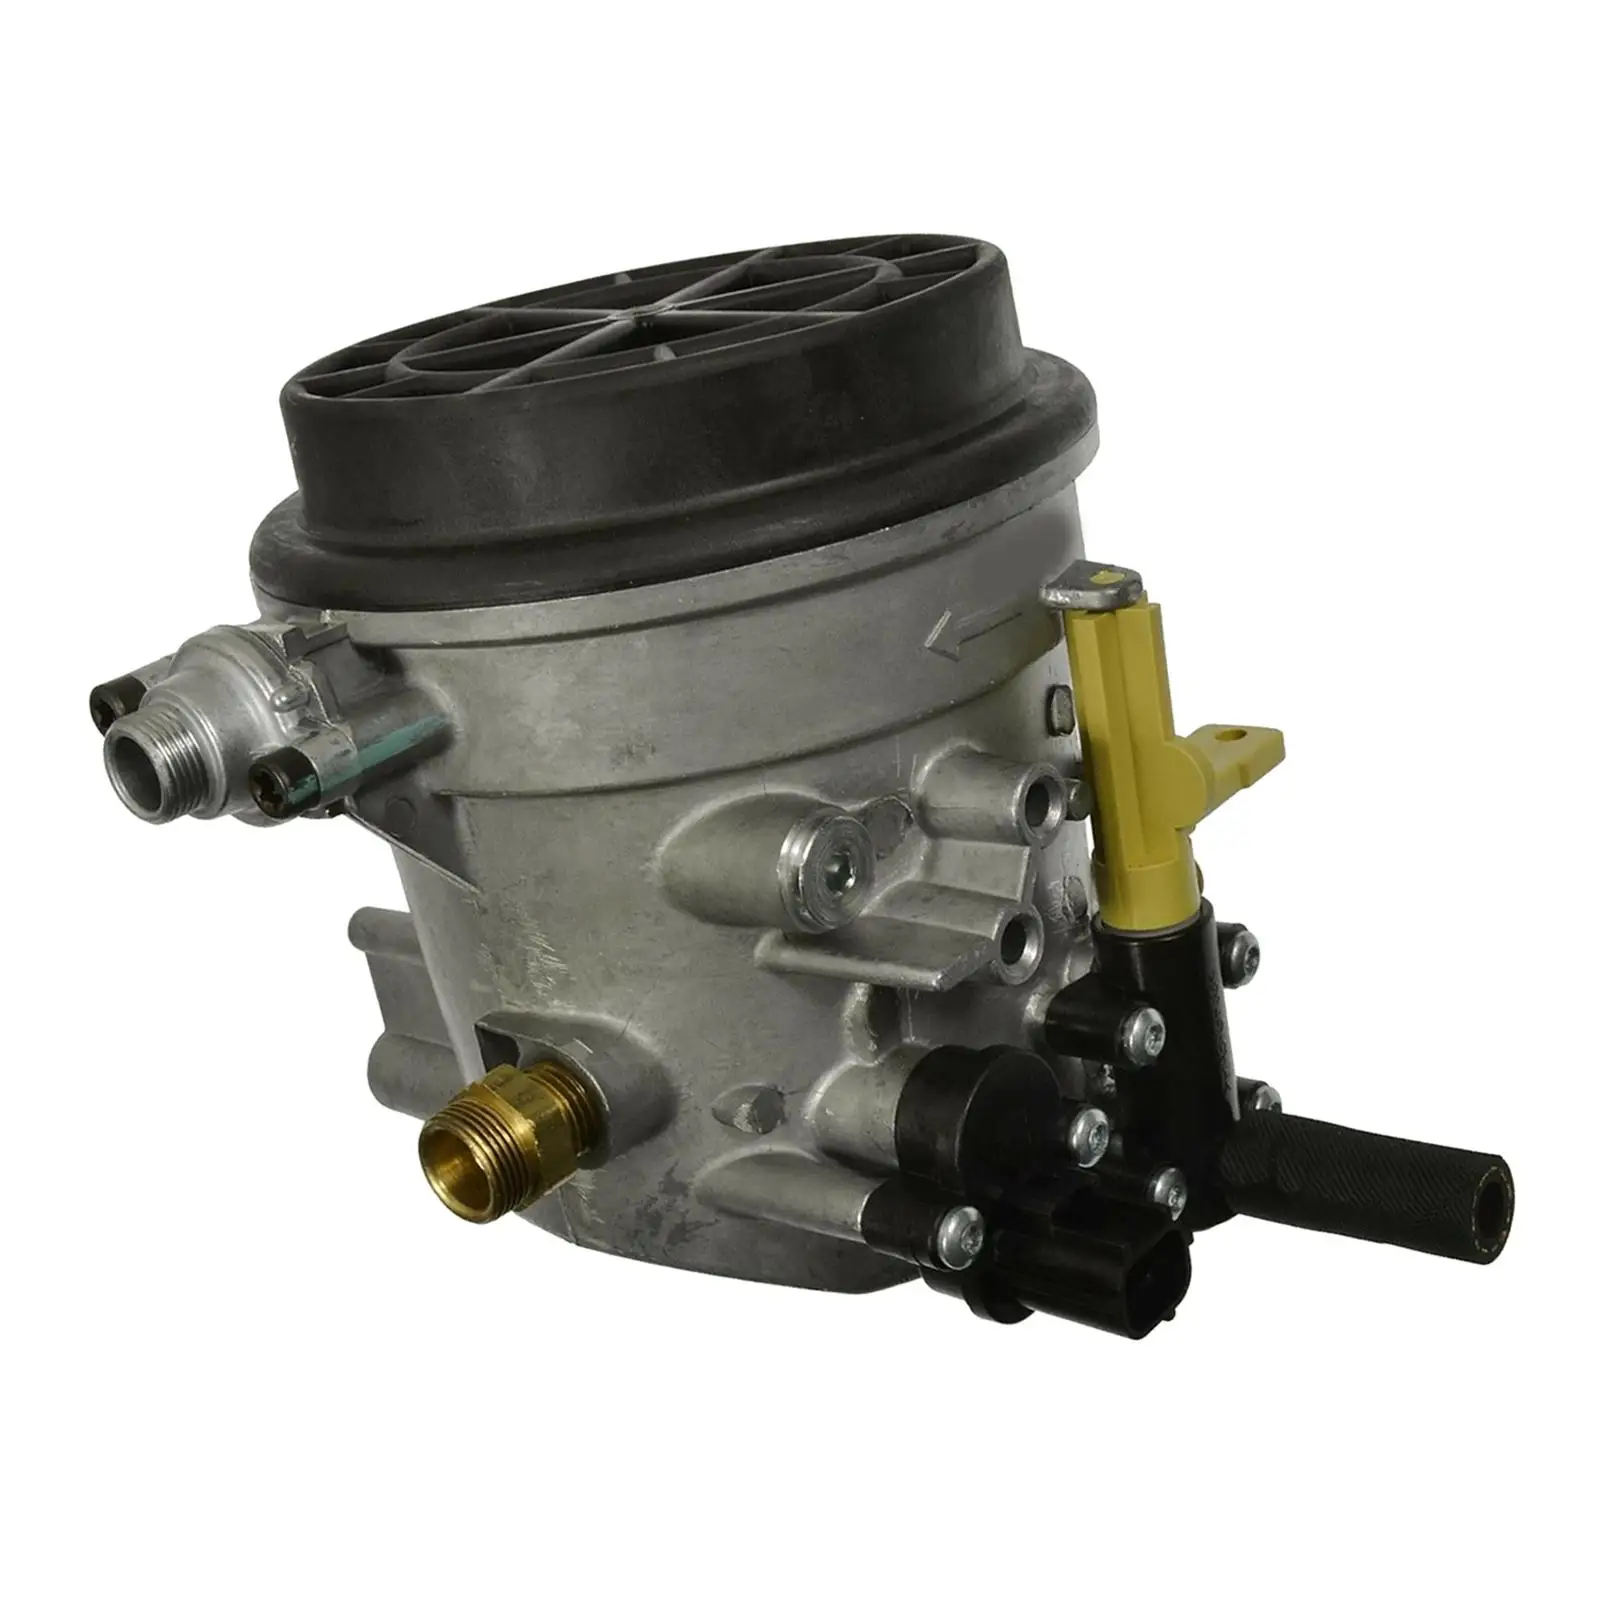 

Fg1057 Car Parts Repl ement Fuel Filters cessories F81Z-9155Housing F81Z915 Fits for 7.3L 1999 3